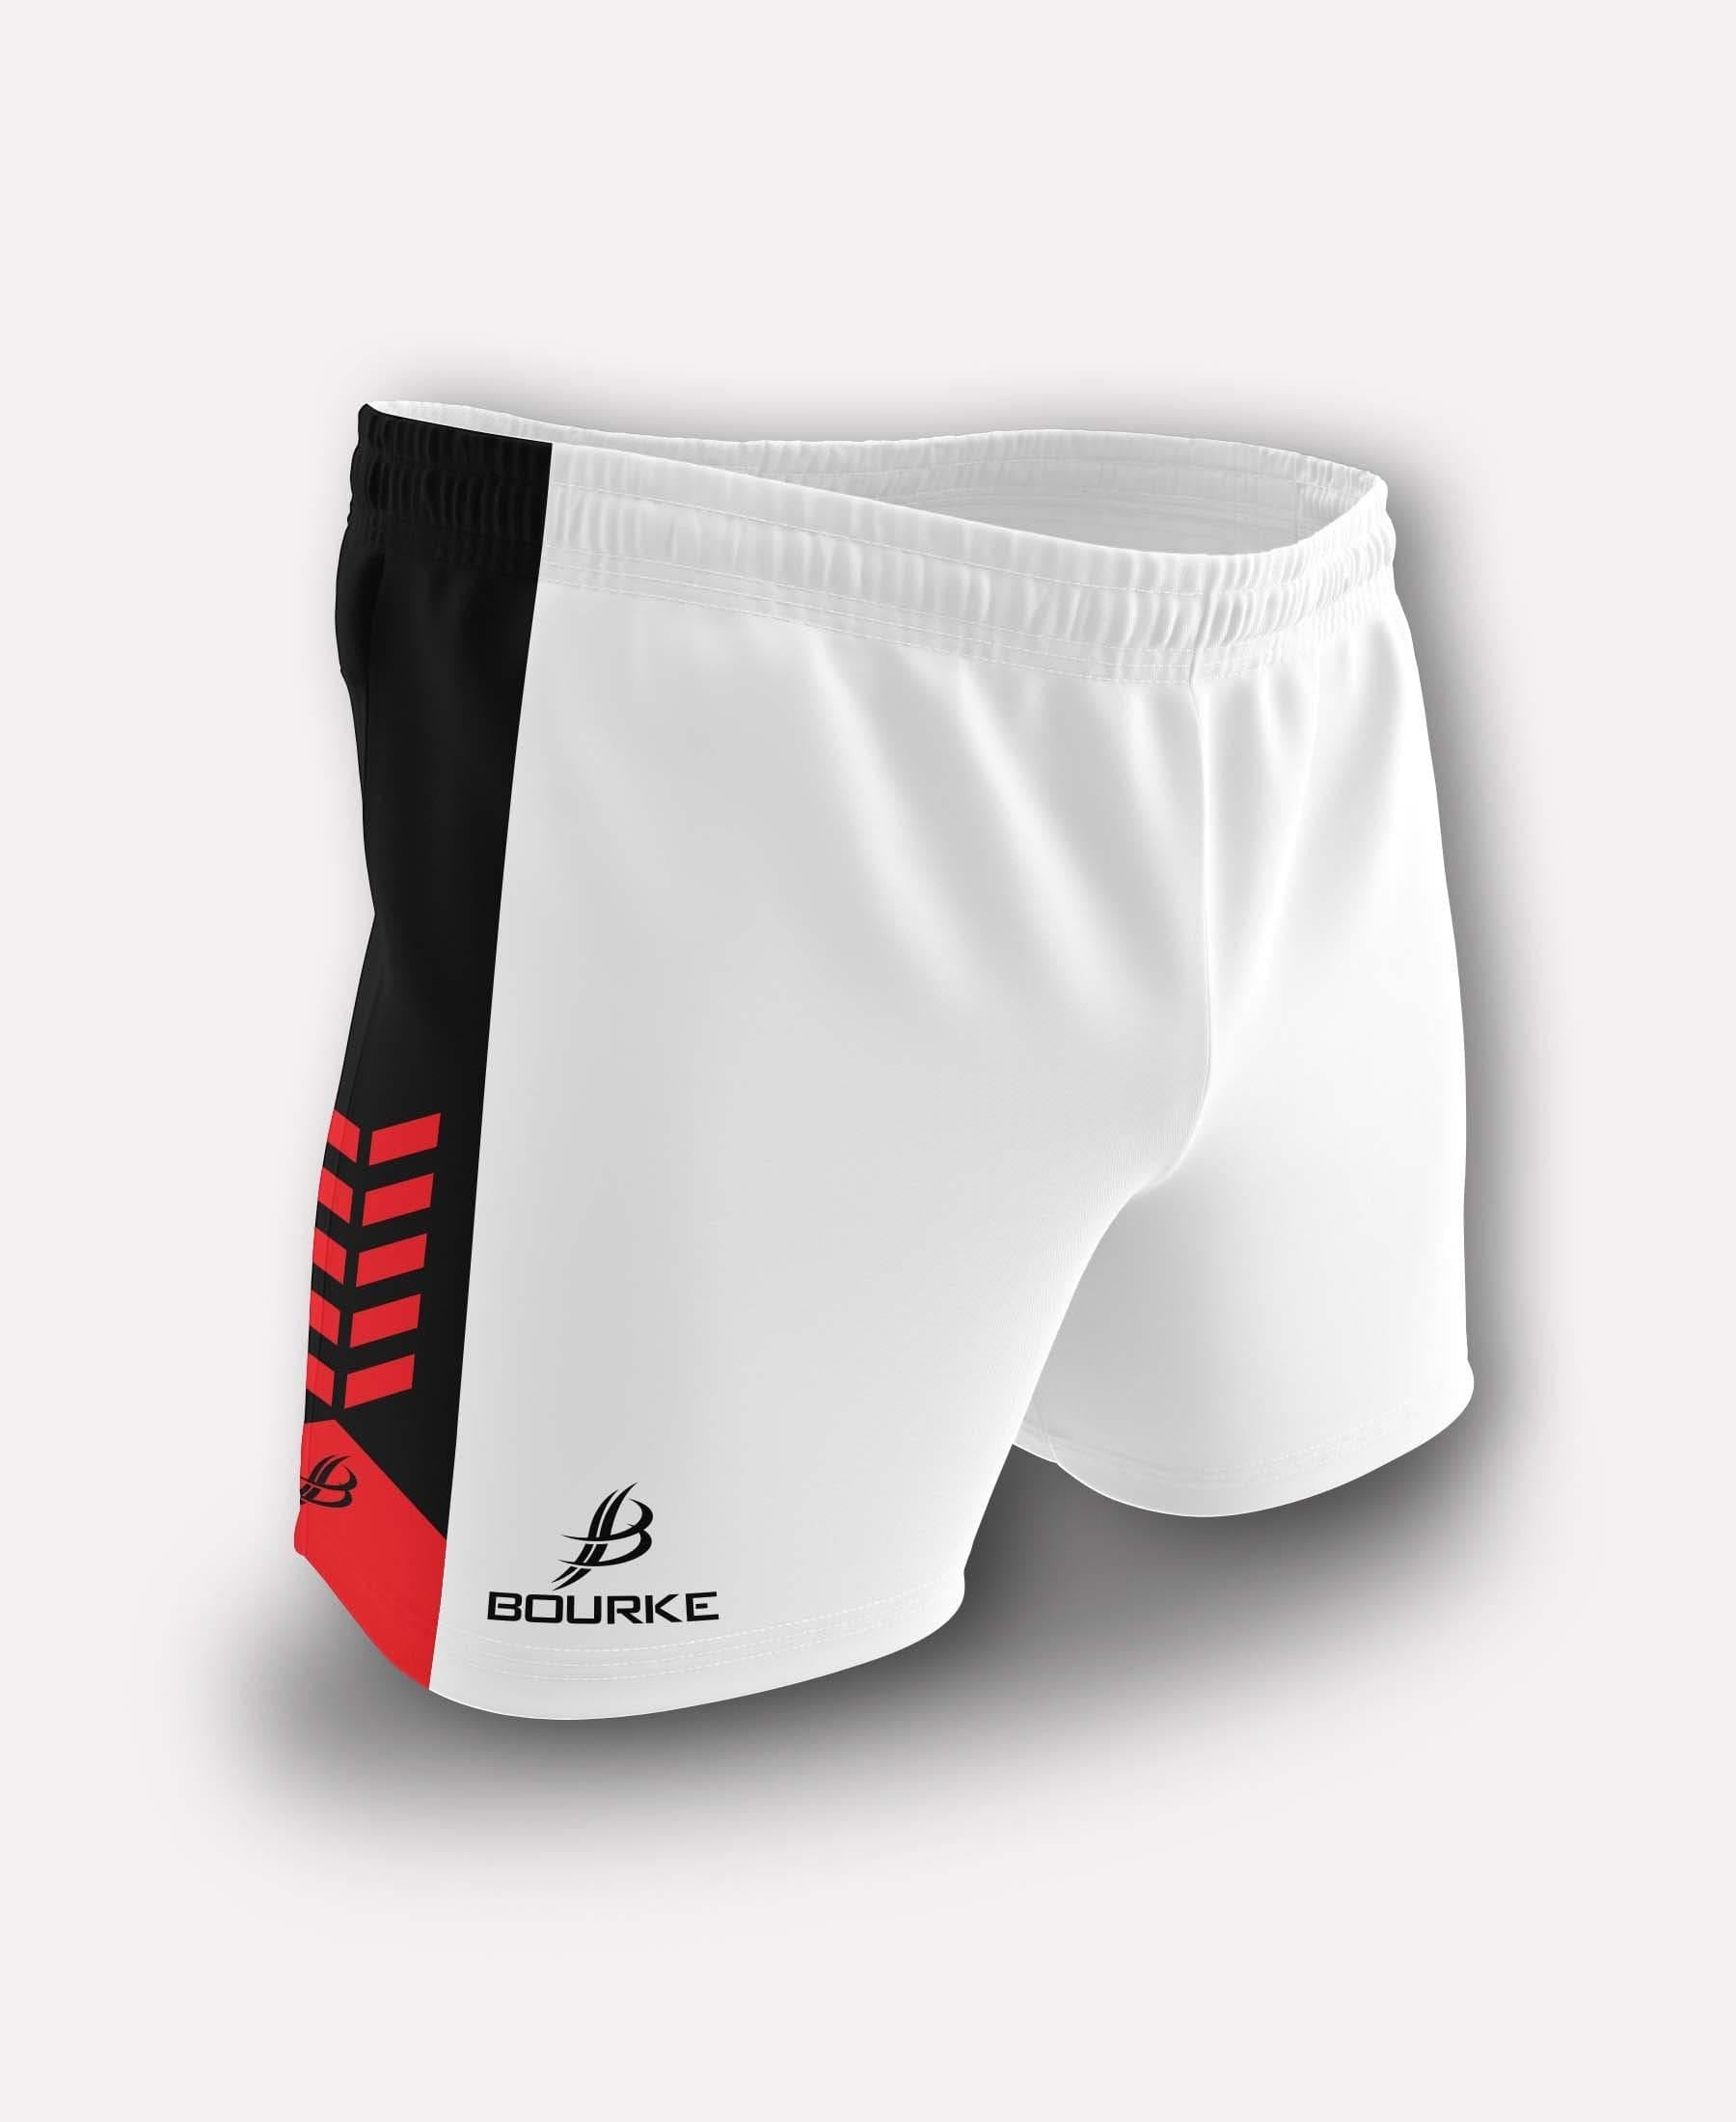 Chevron Kids Shorts (White/Black/Red) - Bourke Sports Limited